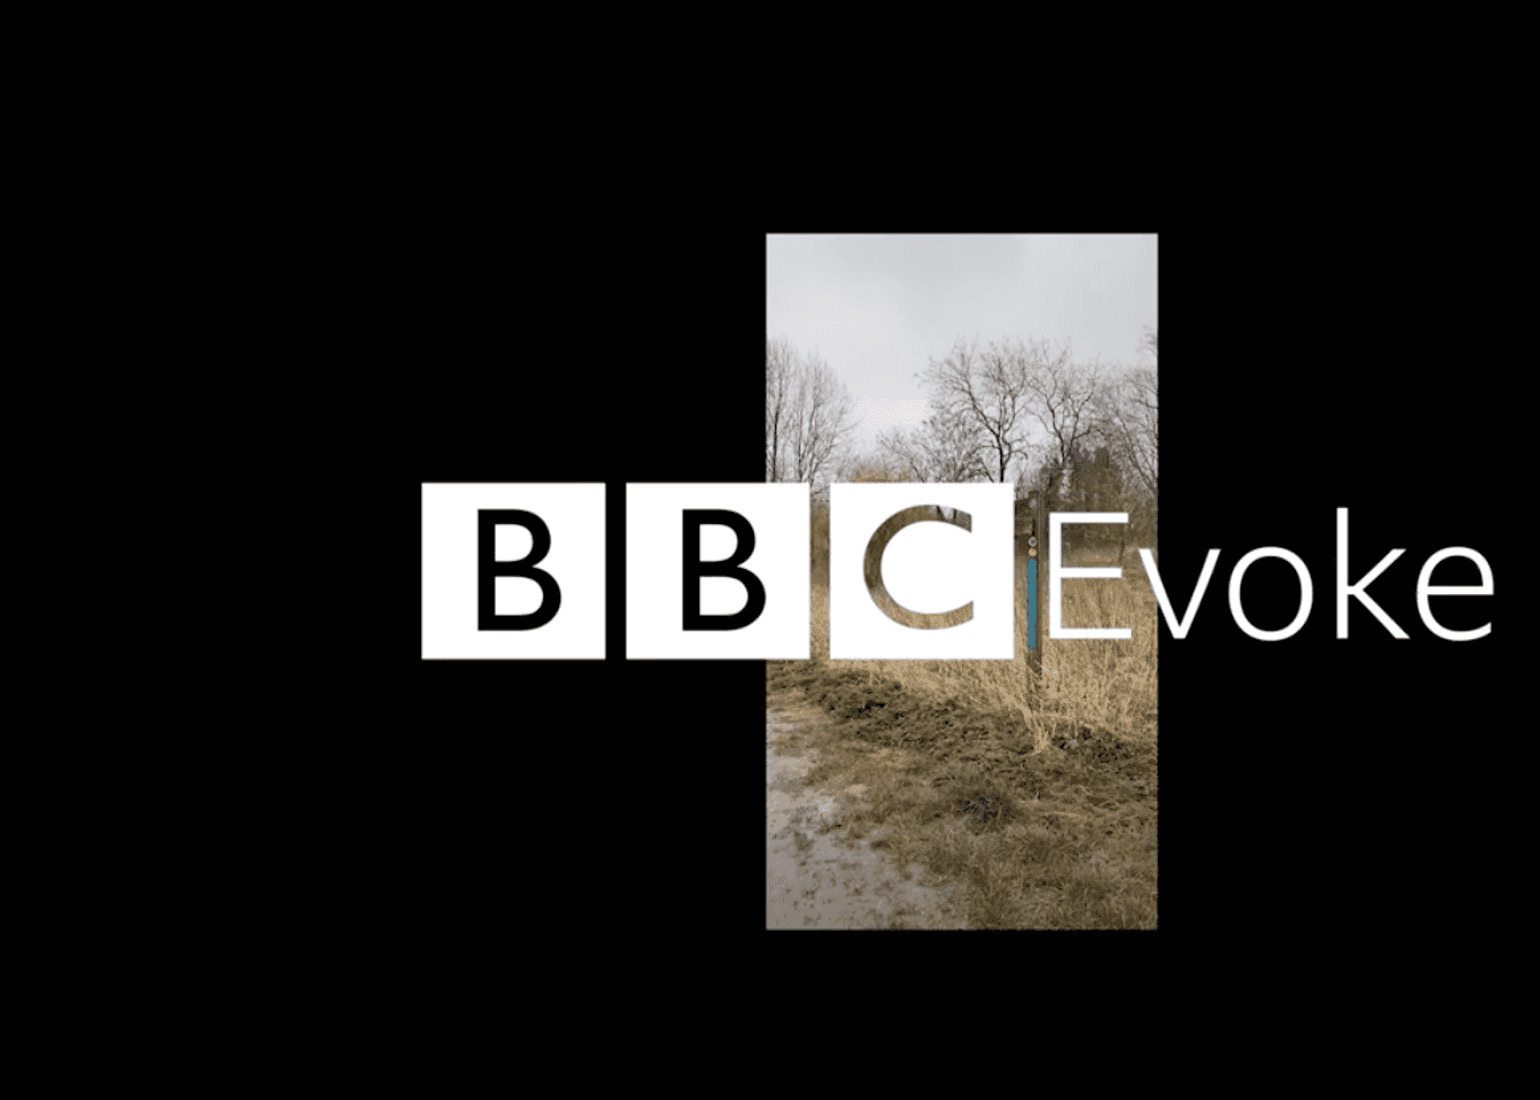 BBC Evoke